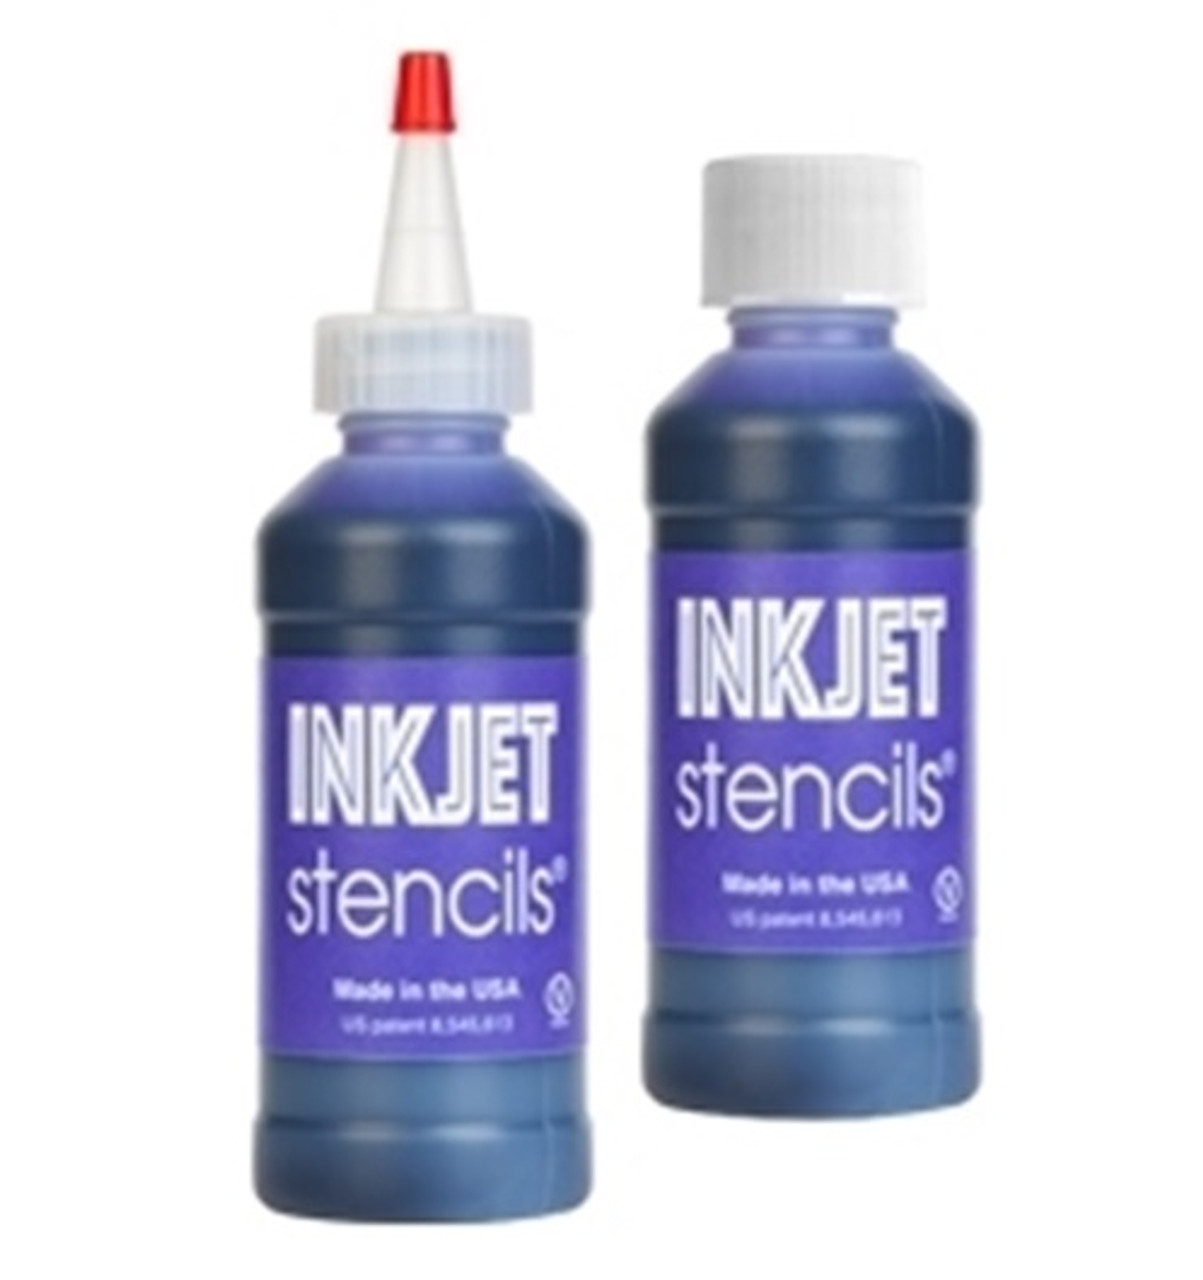 InkJet Stencils Formula, 4oz. bottle